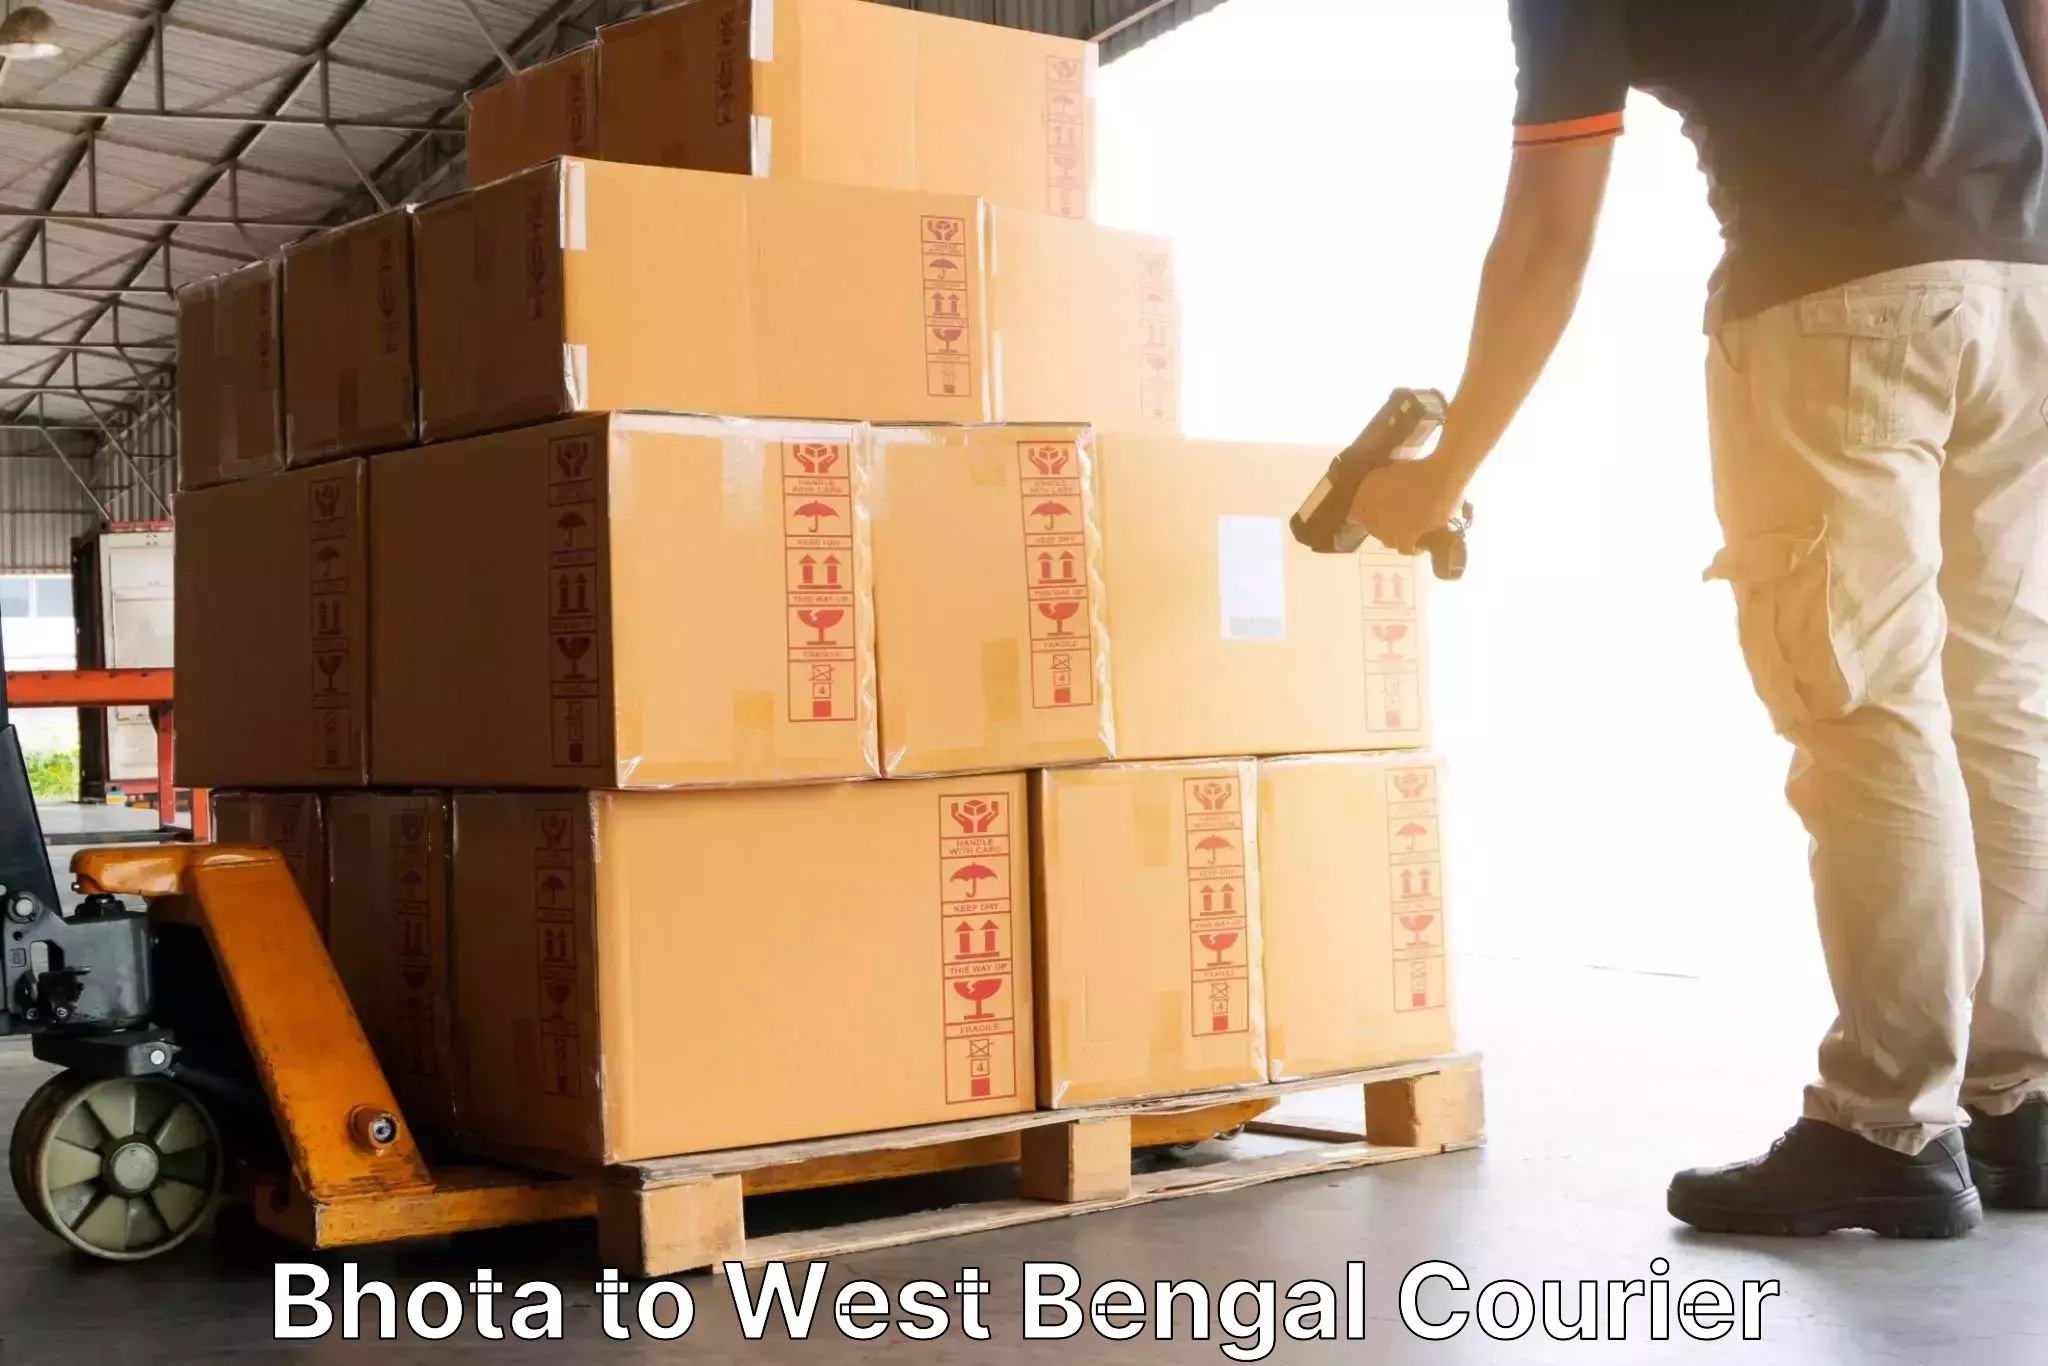 Modern delivery methods Bhota to Kolkata